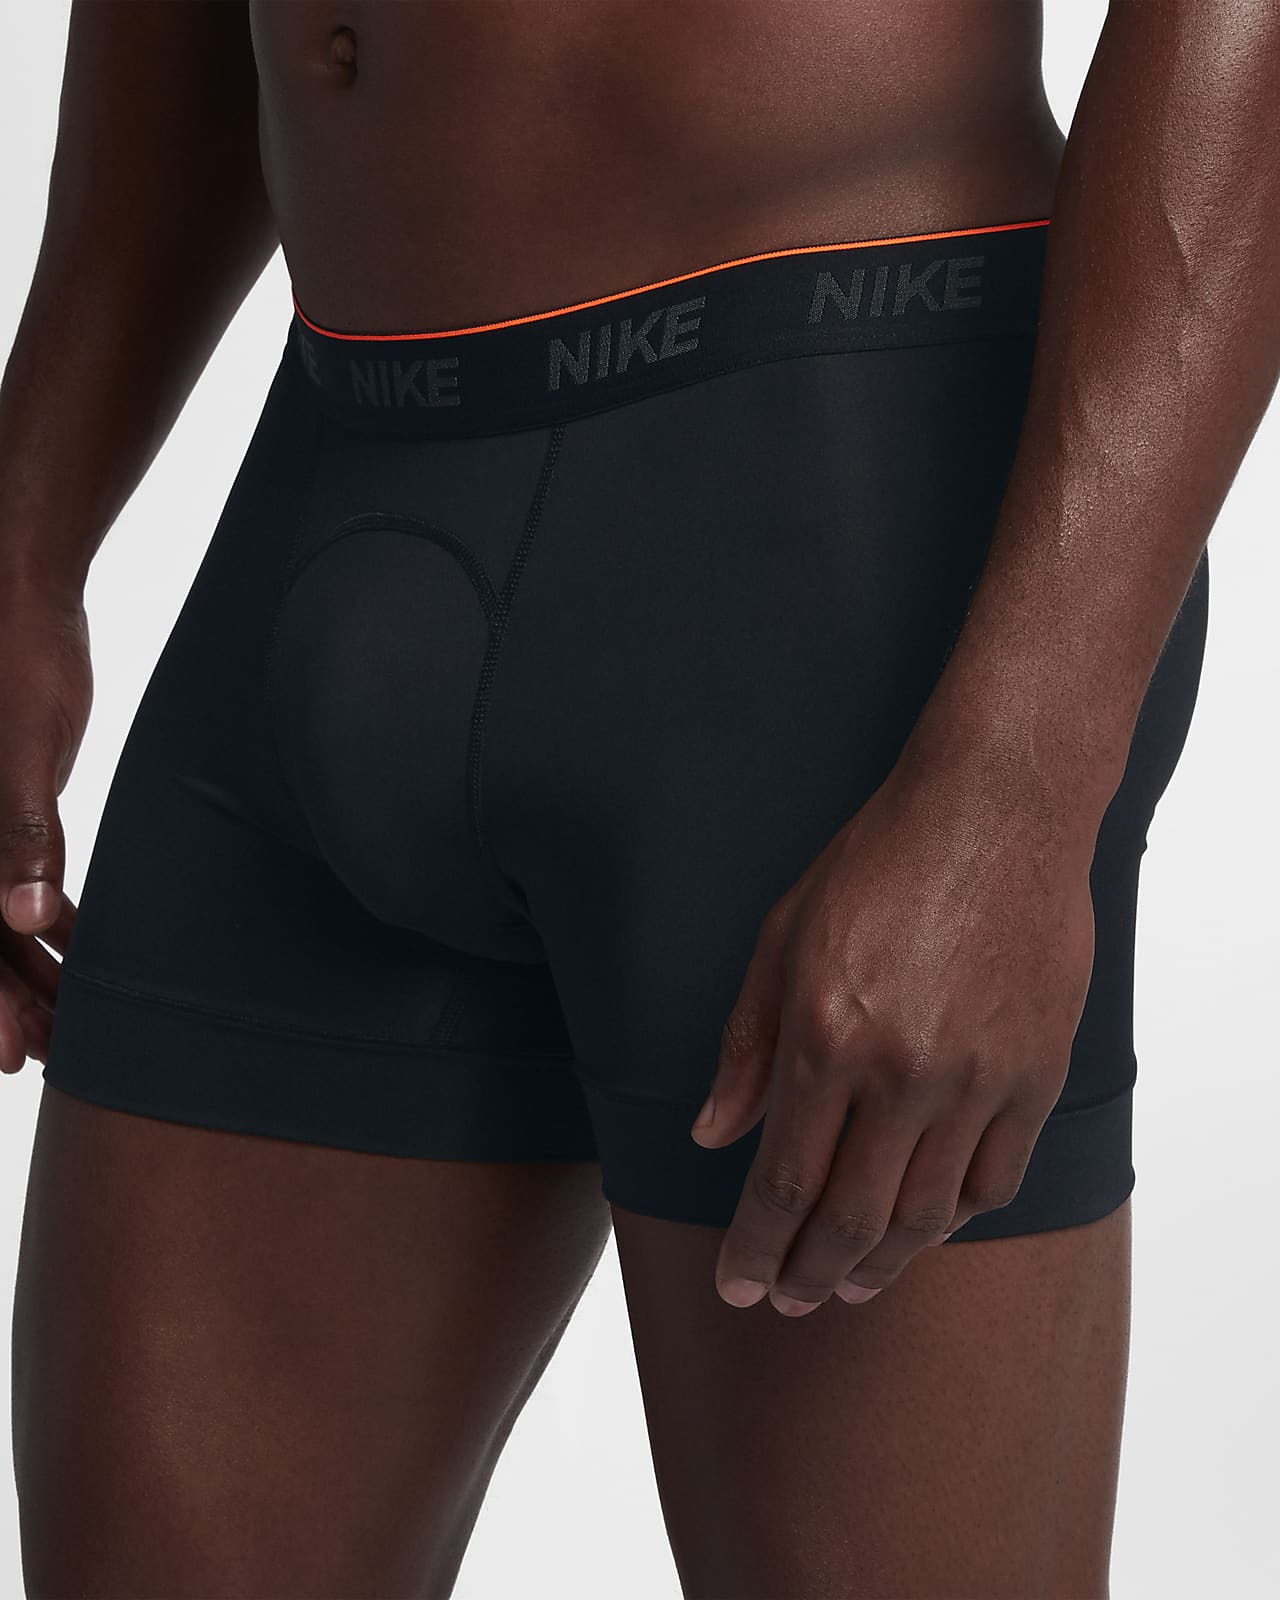 nike mens compression underwear